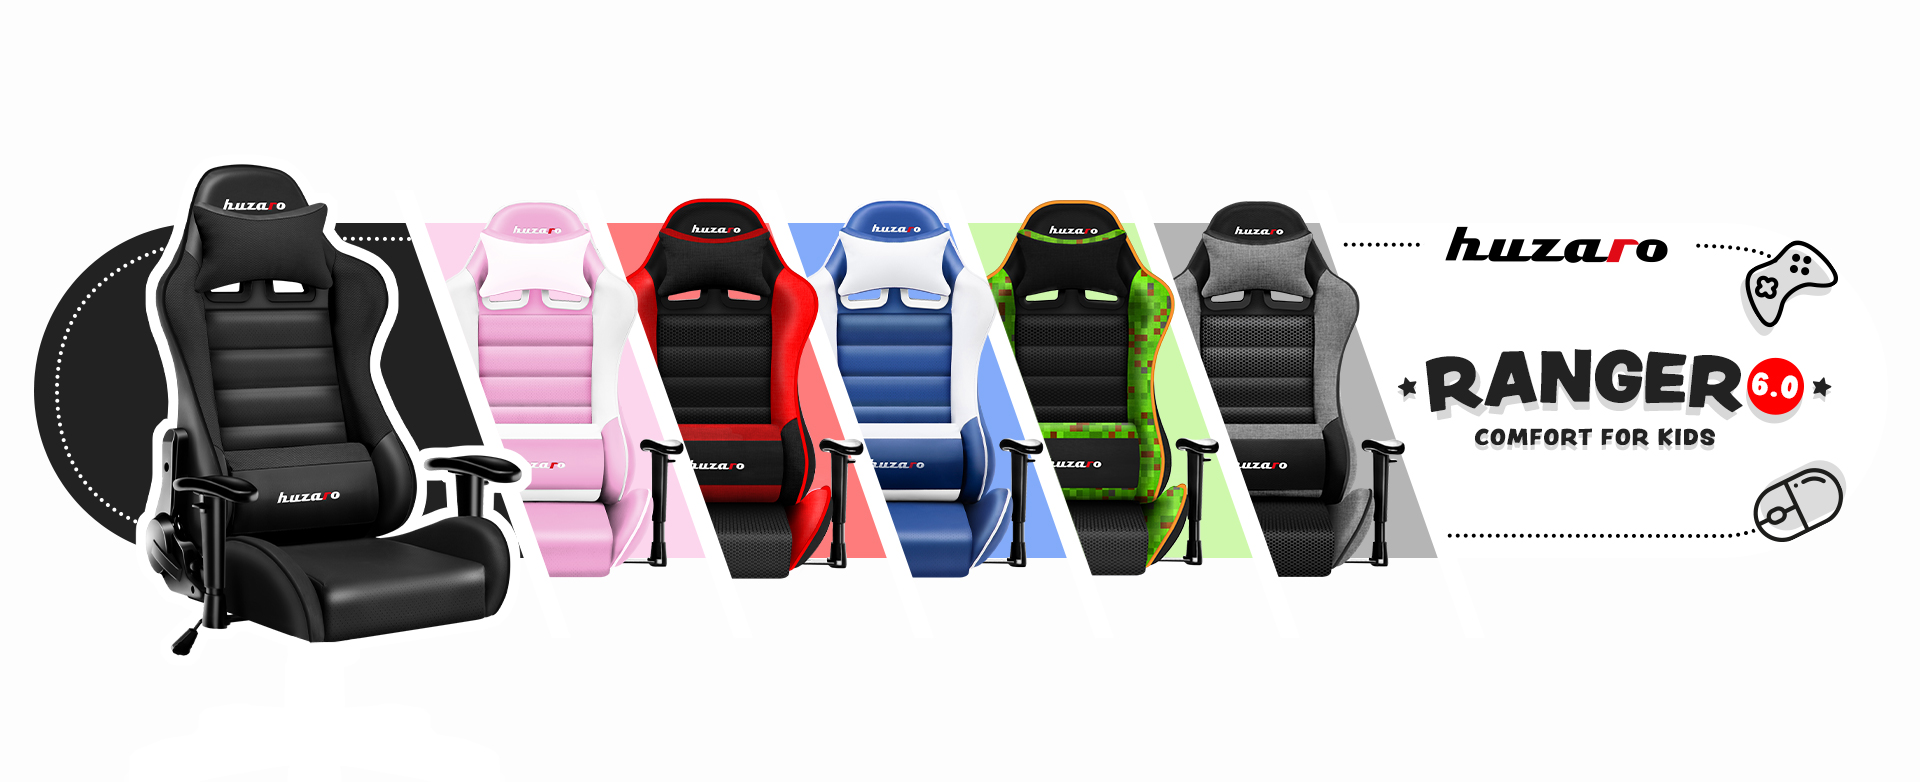 Dostępne kolory fotela Huzaro Ranger 6.0 